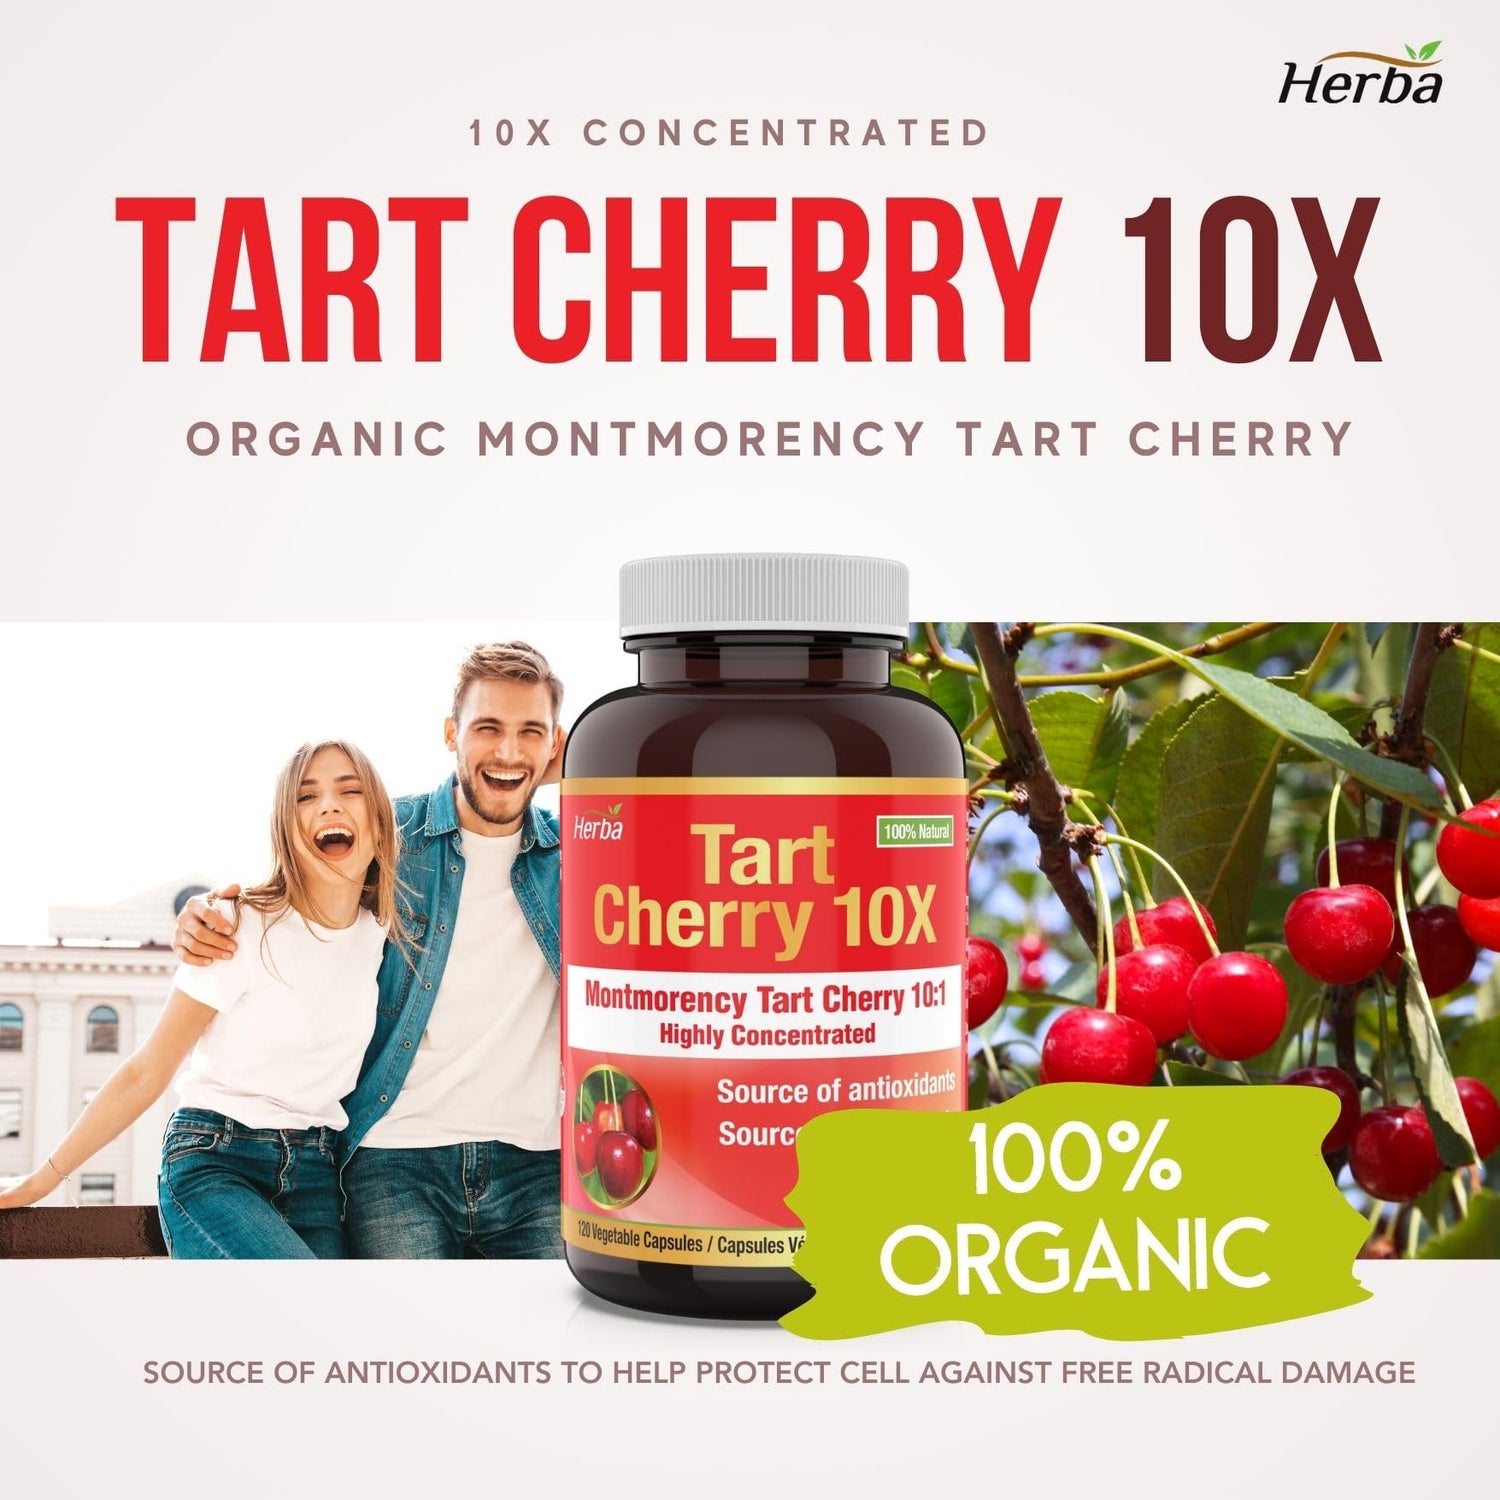 buy tart cherry capsules made in Canada